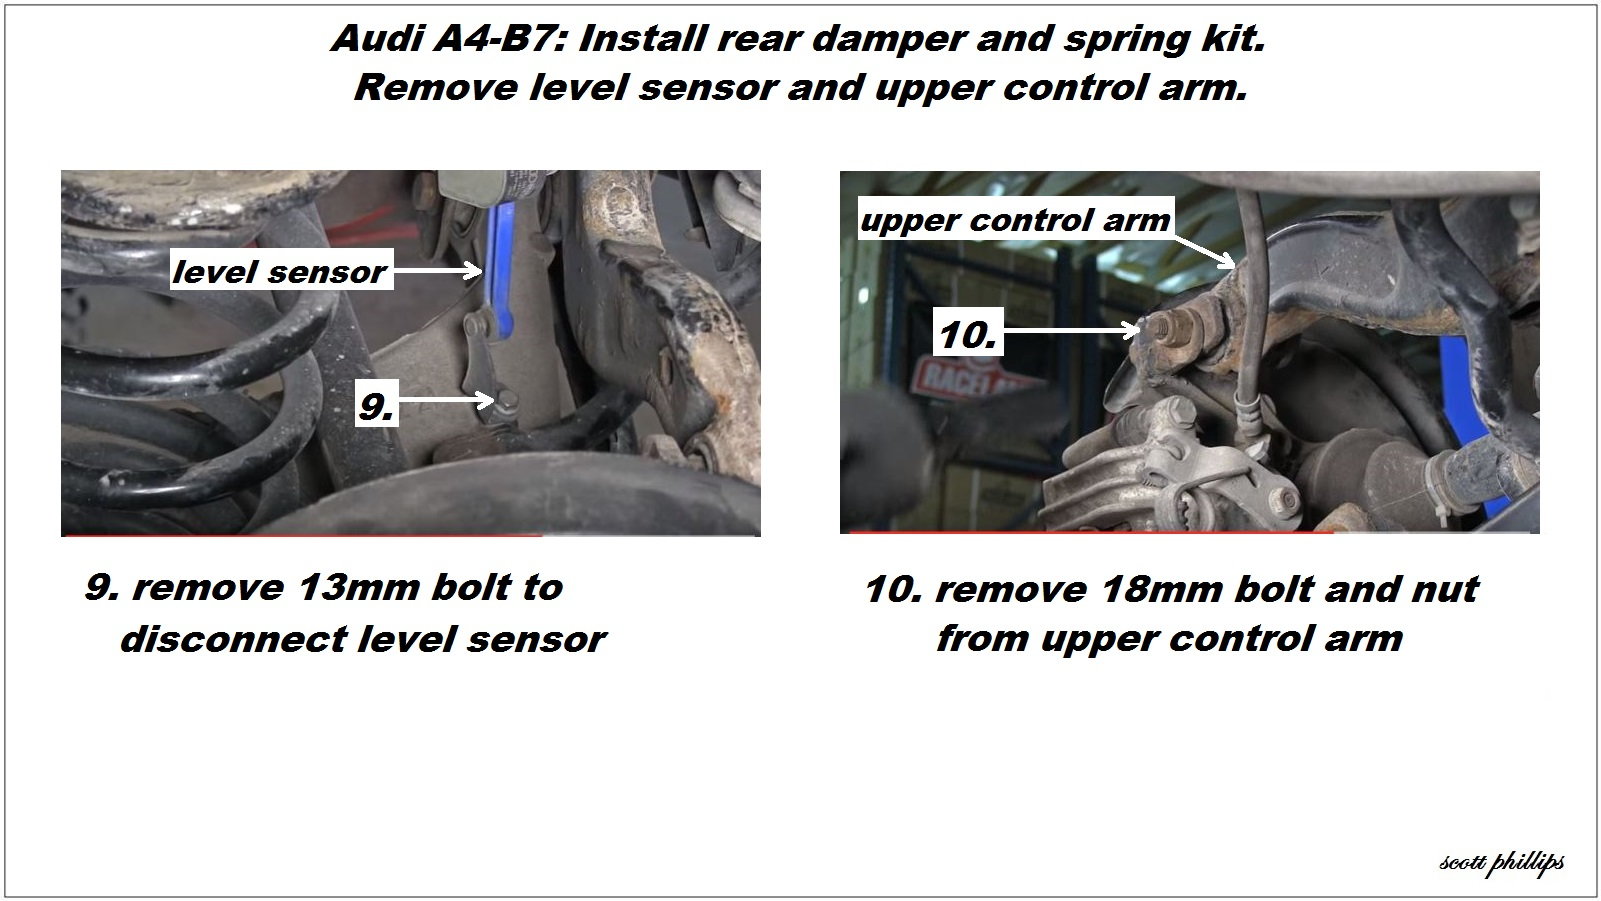 Disconnect level sensor and upper control arm